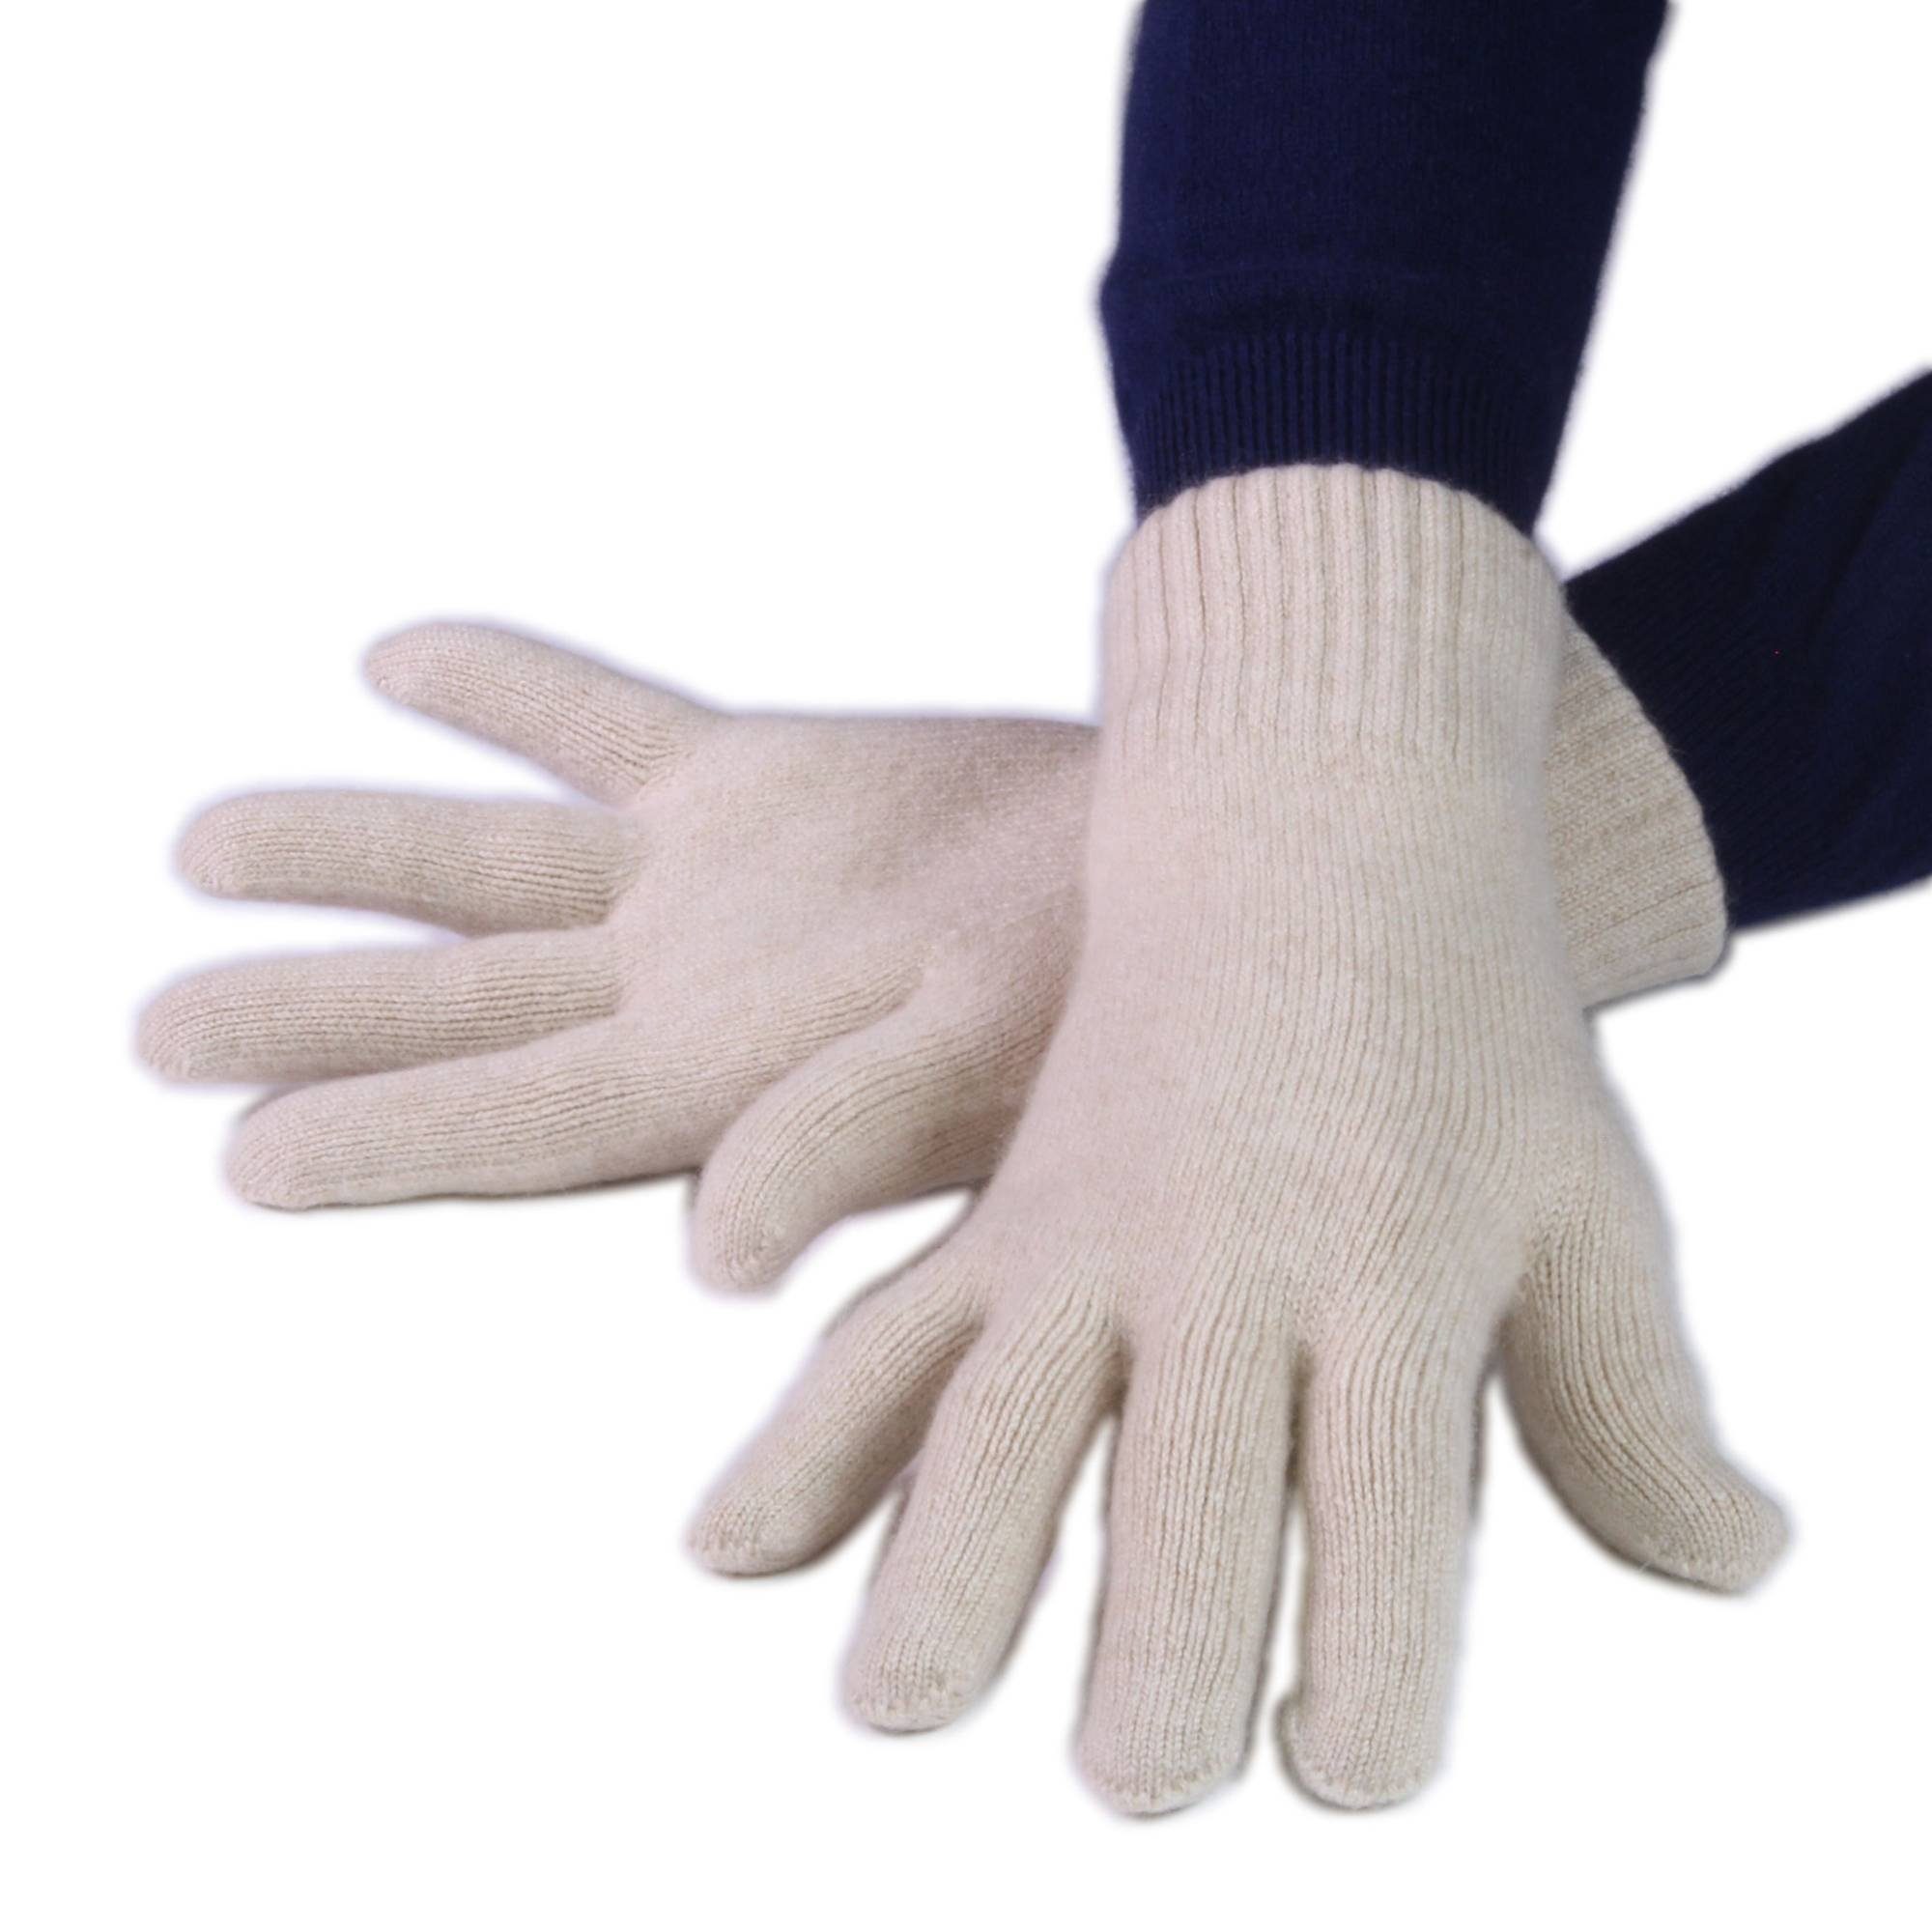 Tumelo Strickhandschuhe HerrenBeige Handschuhe 100% Kaschmir